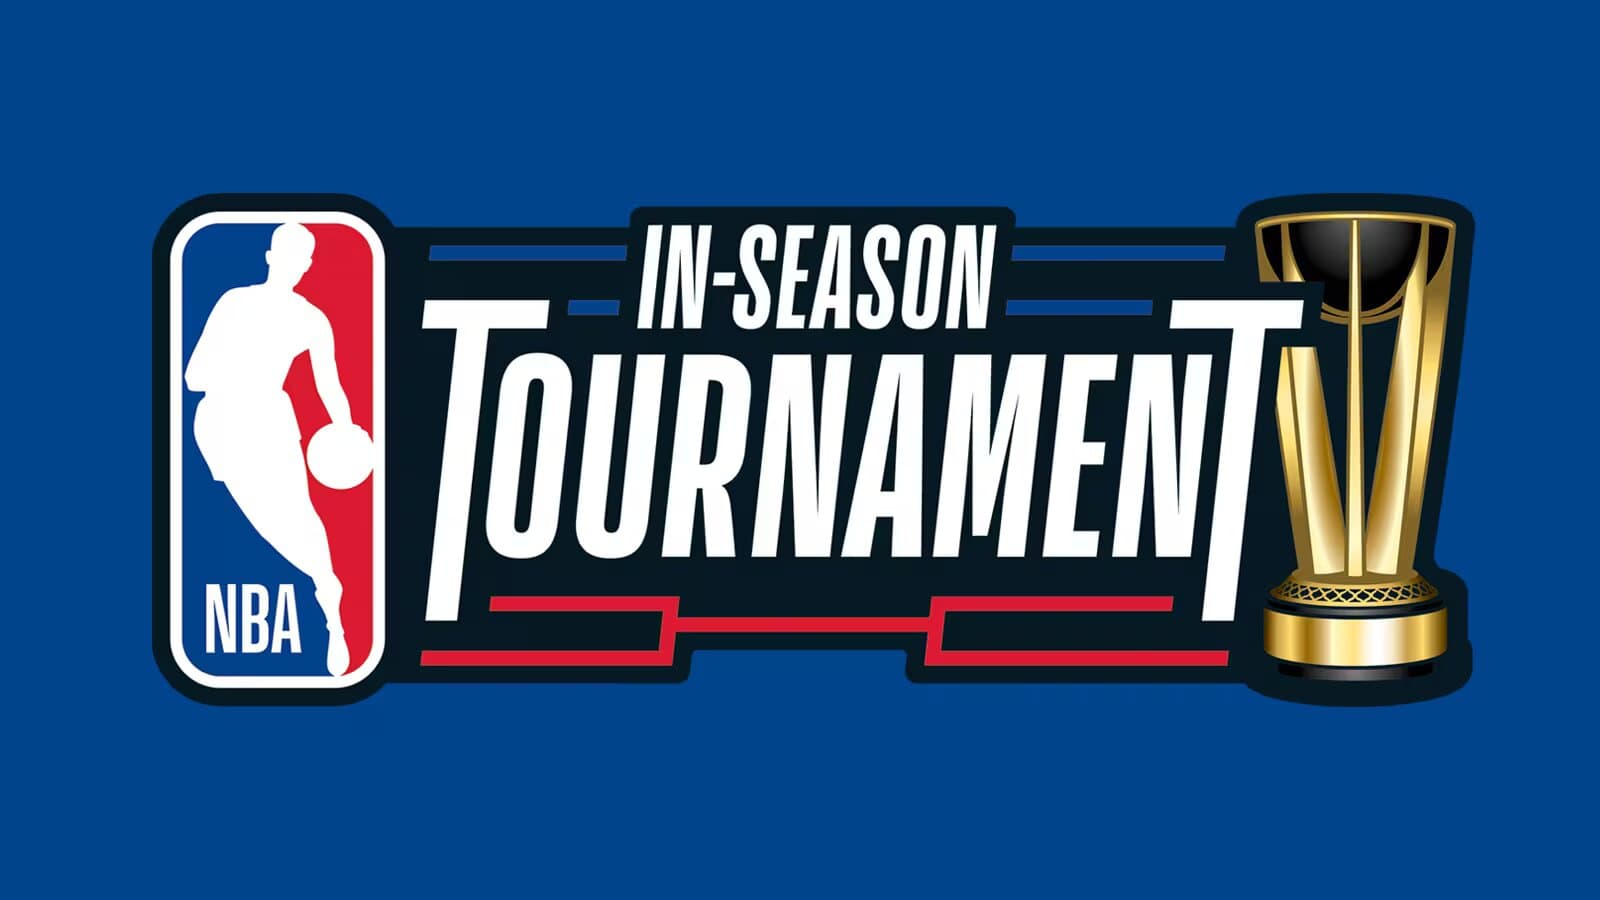 NBA Tournament NBA InSeason Tournament Schedule, Prizes, Rules